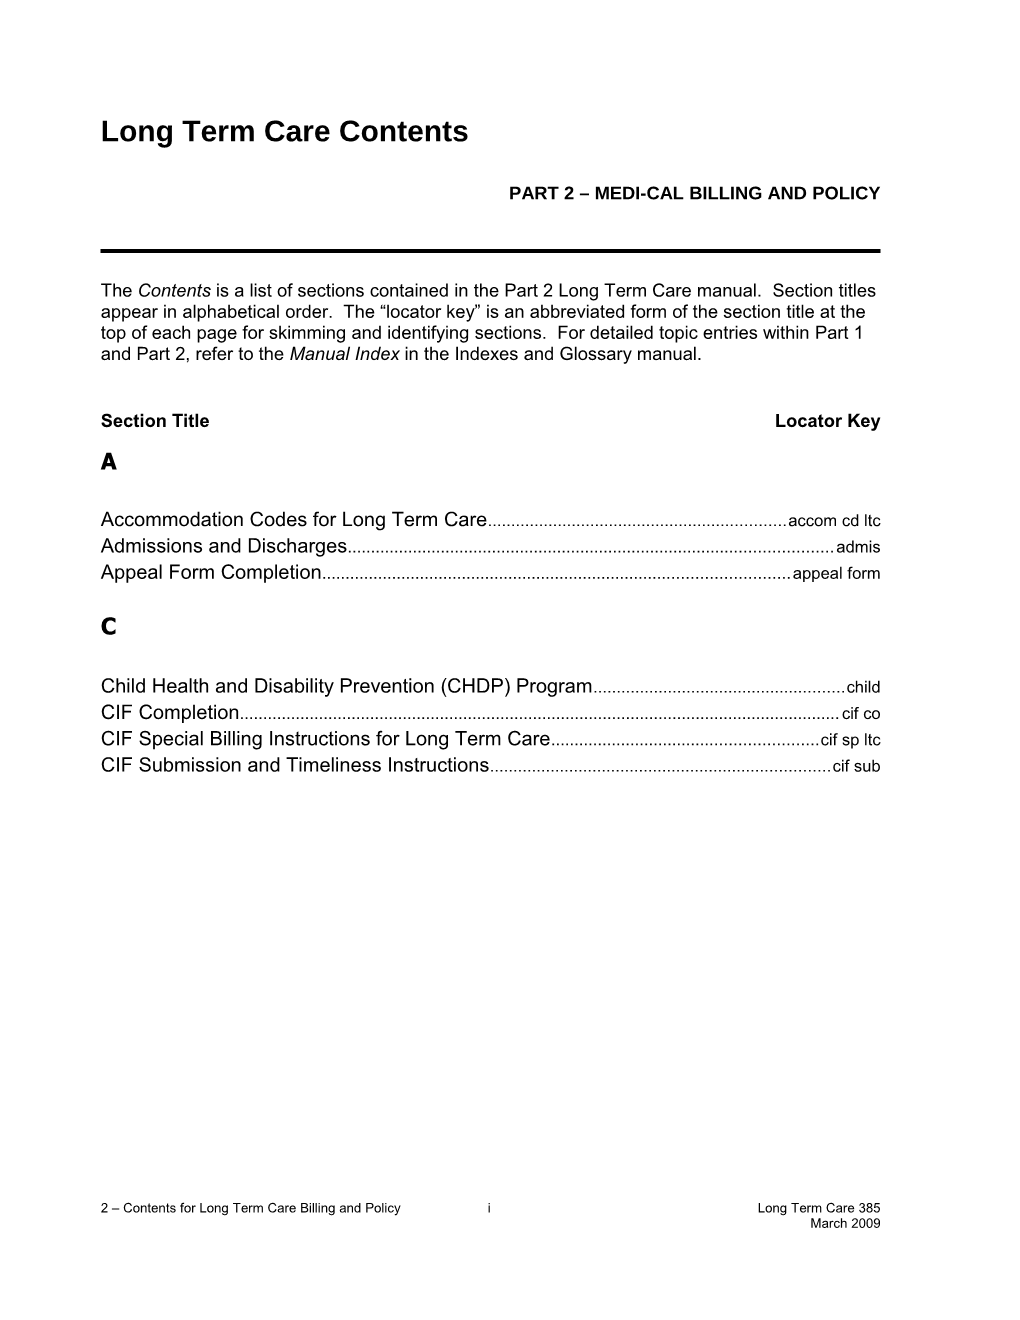 Contents (Part 2 Medi-Cal Billing and Policy): Long Term Care (LTC) (2Toc Ltc)